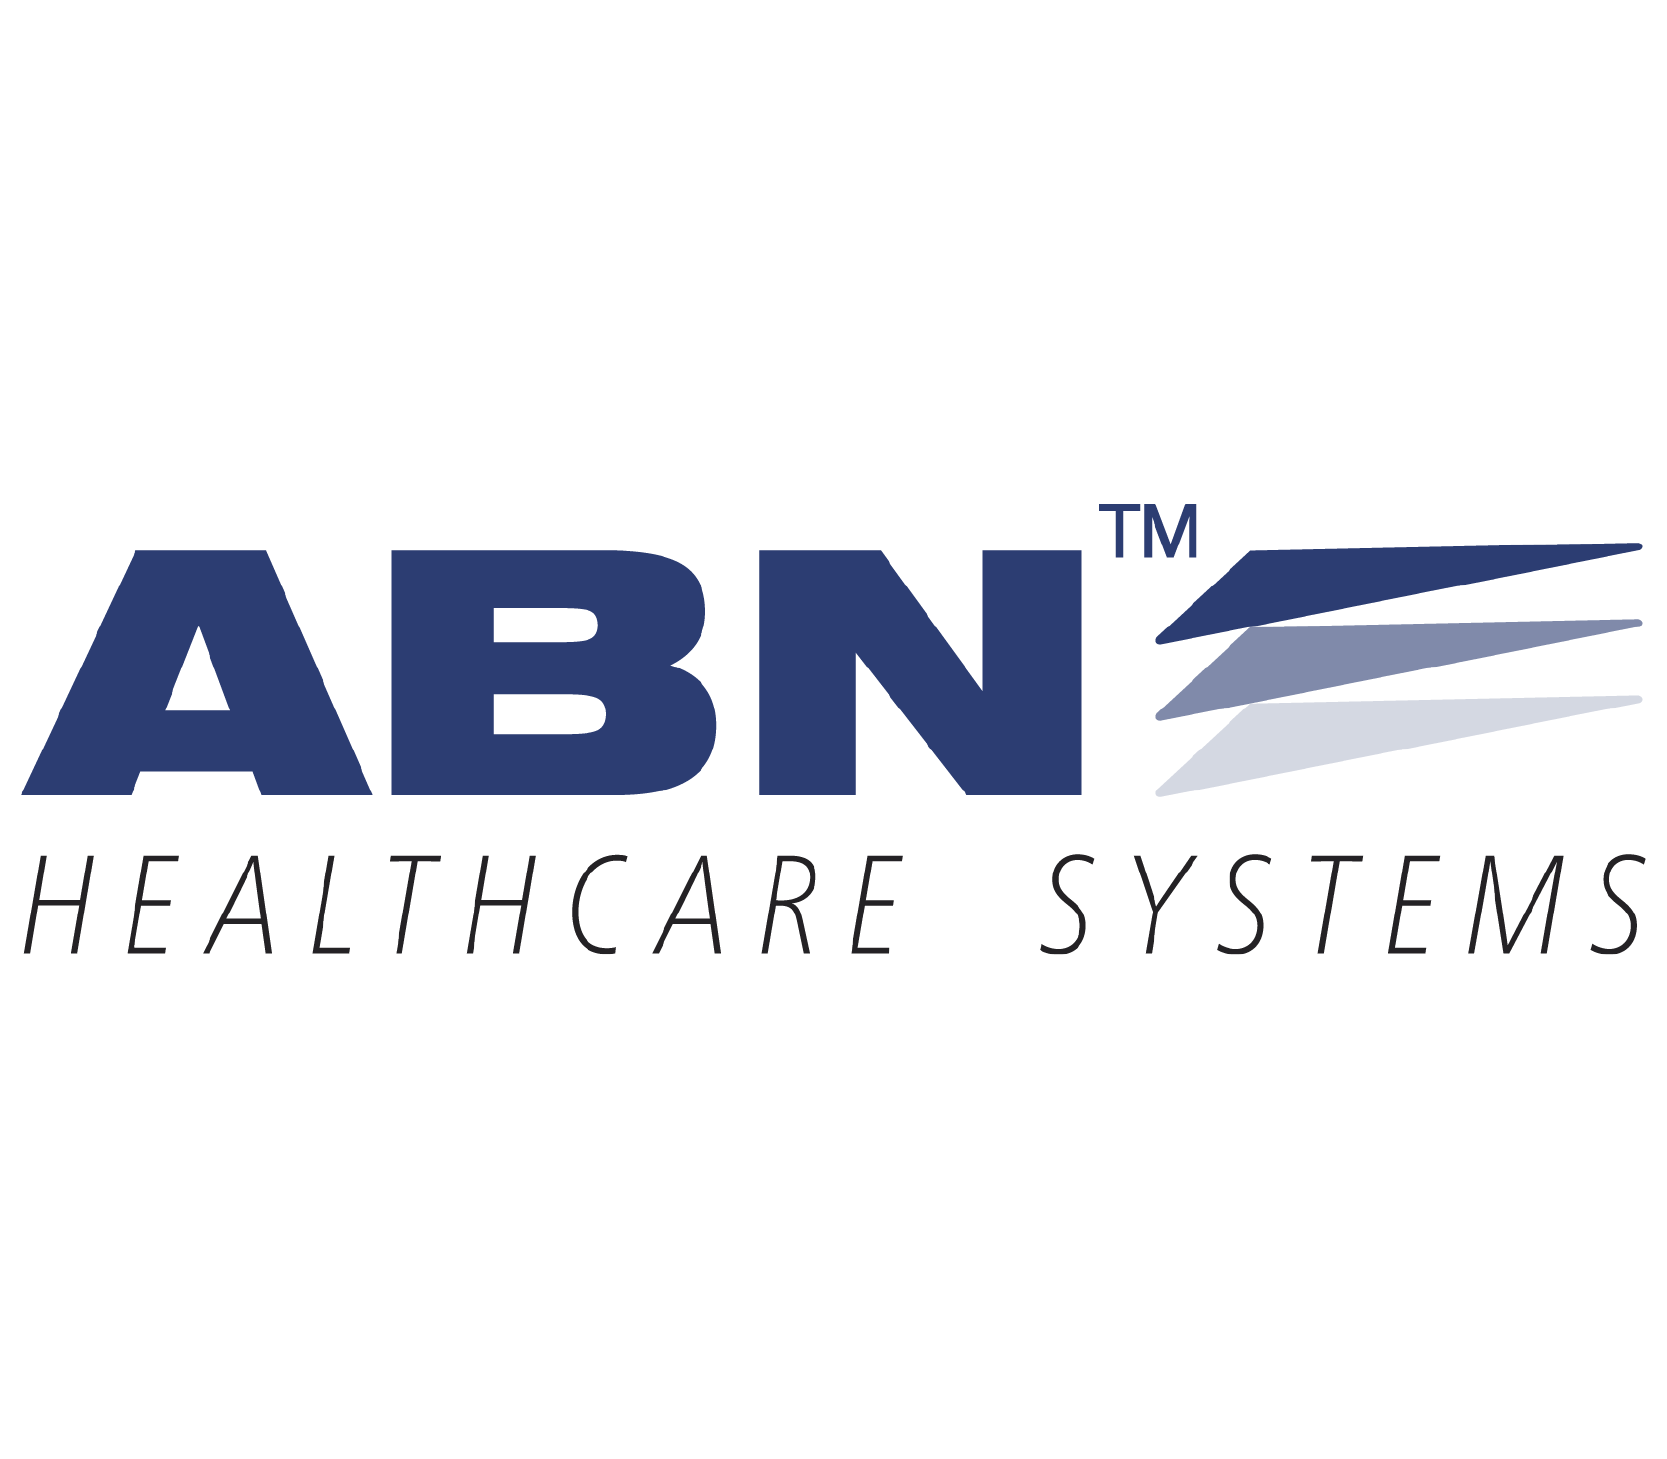 Brand: ABN